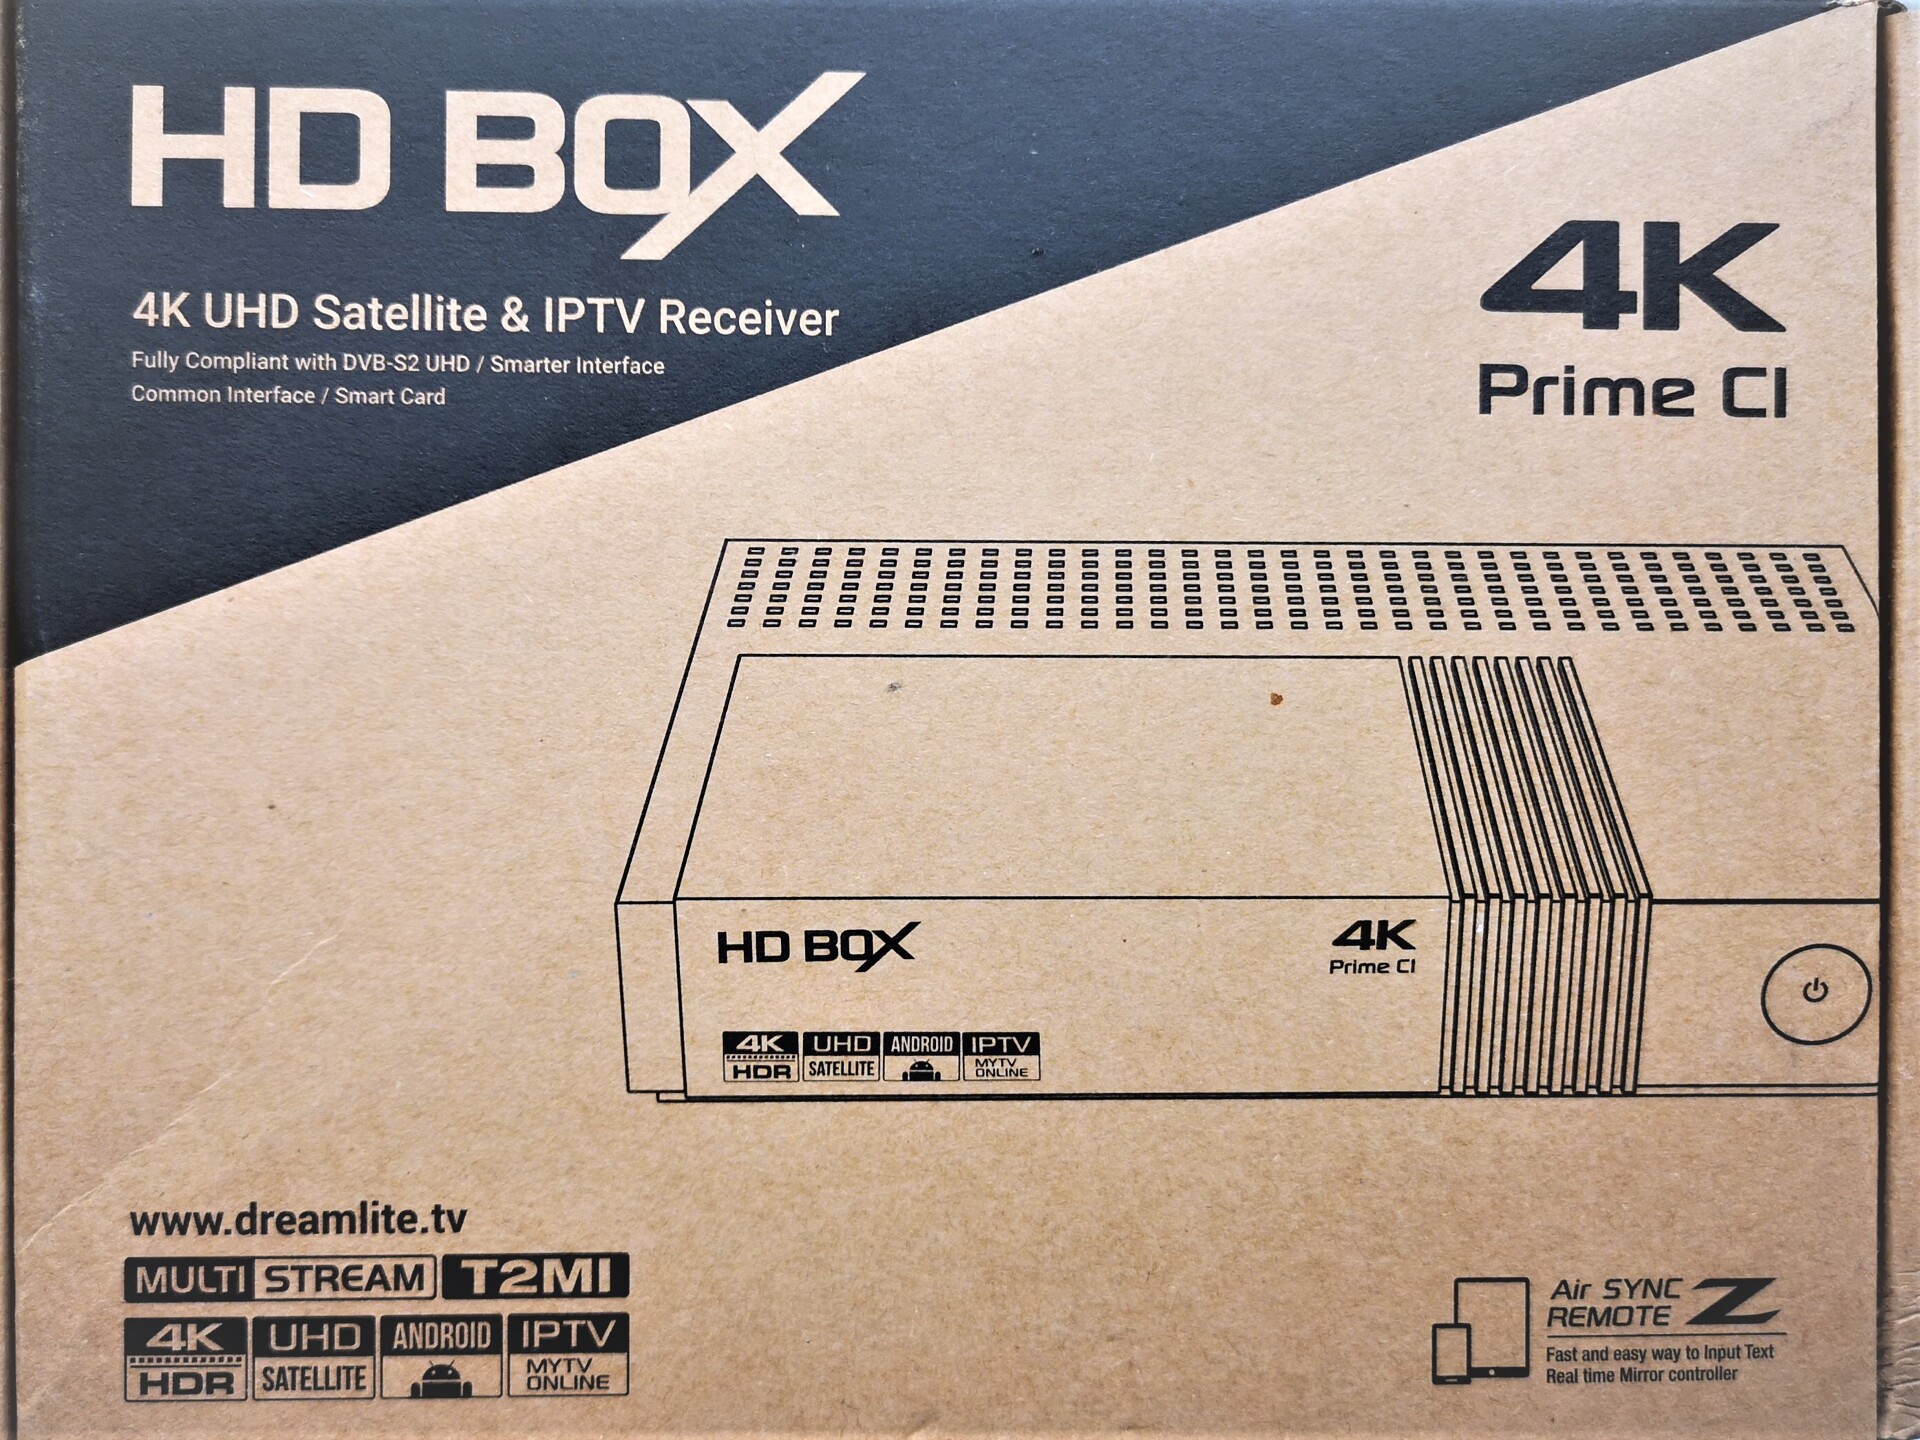 HD BOX 4K Prime CI HD Android